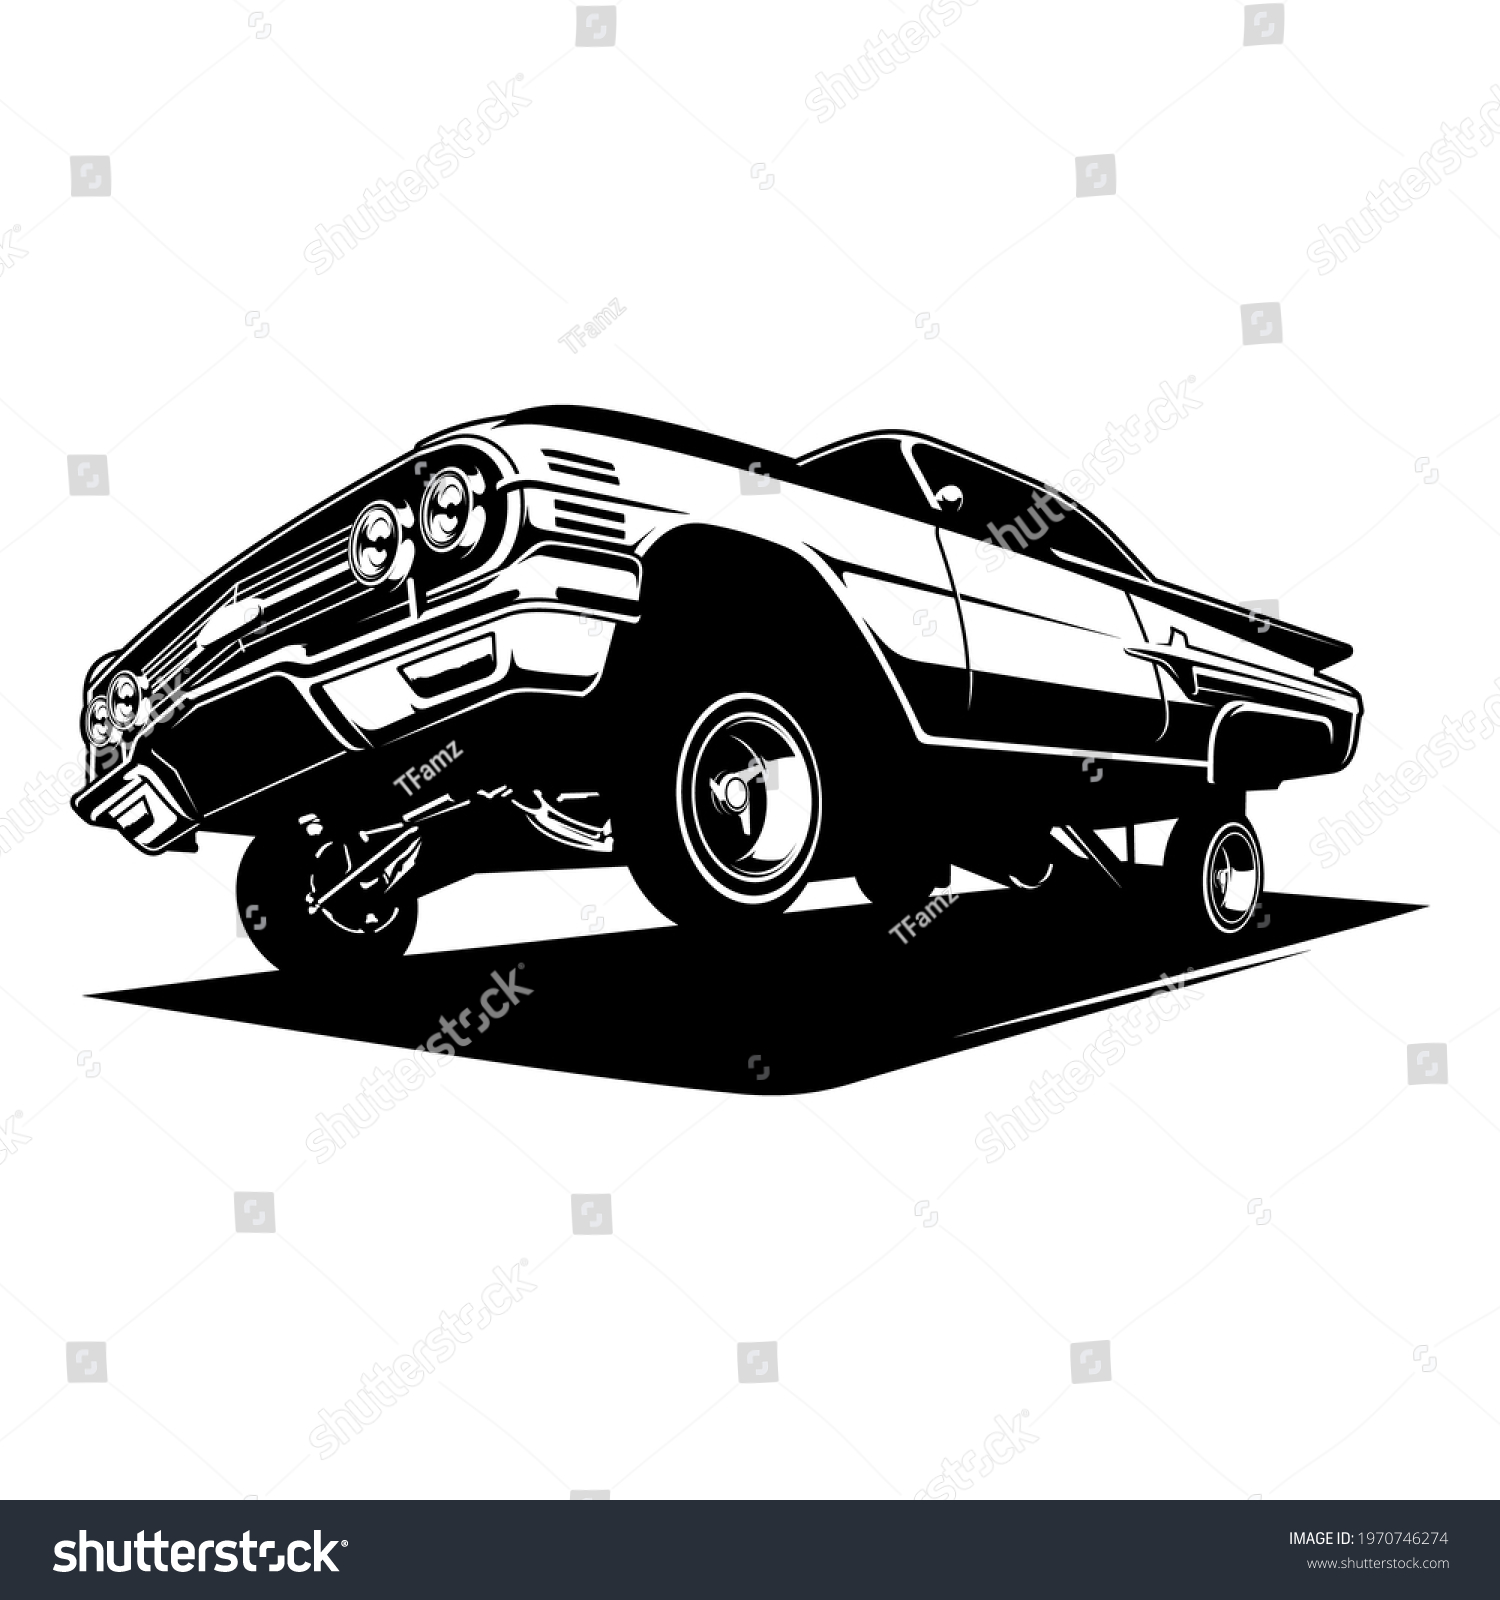 SVG of vintage lowrider car detailed image in black and white svg